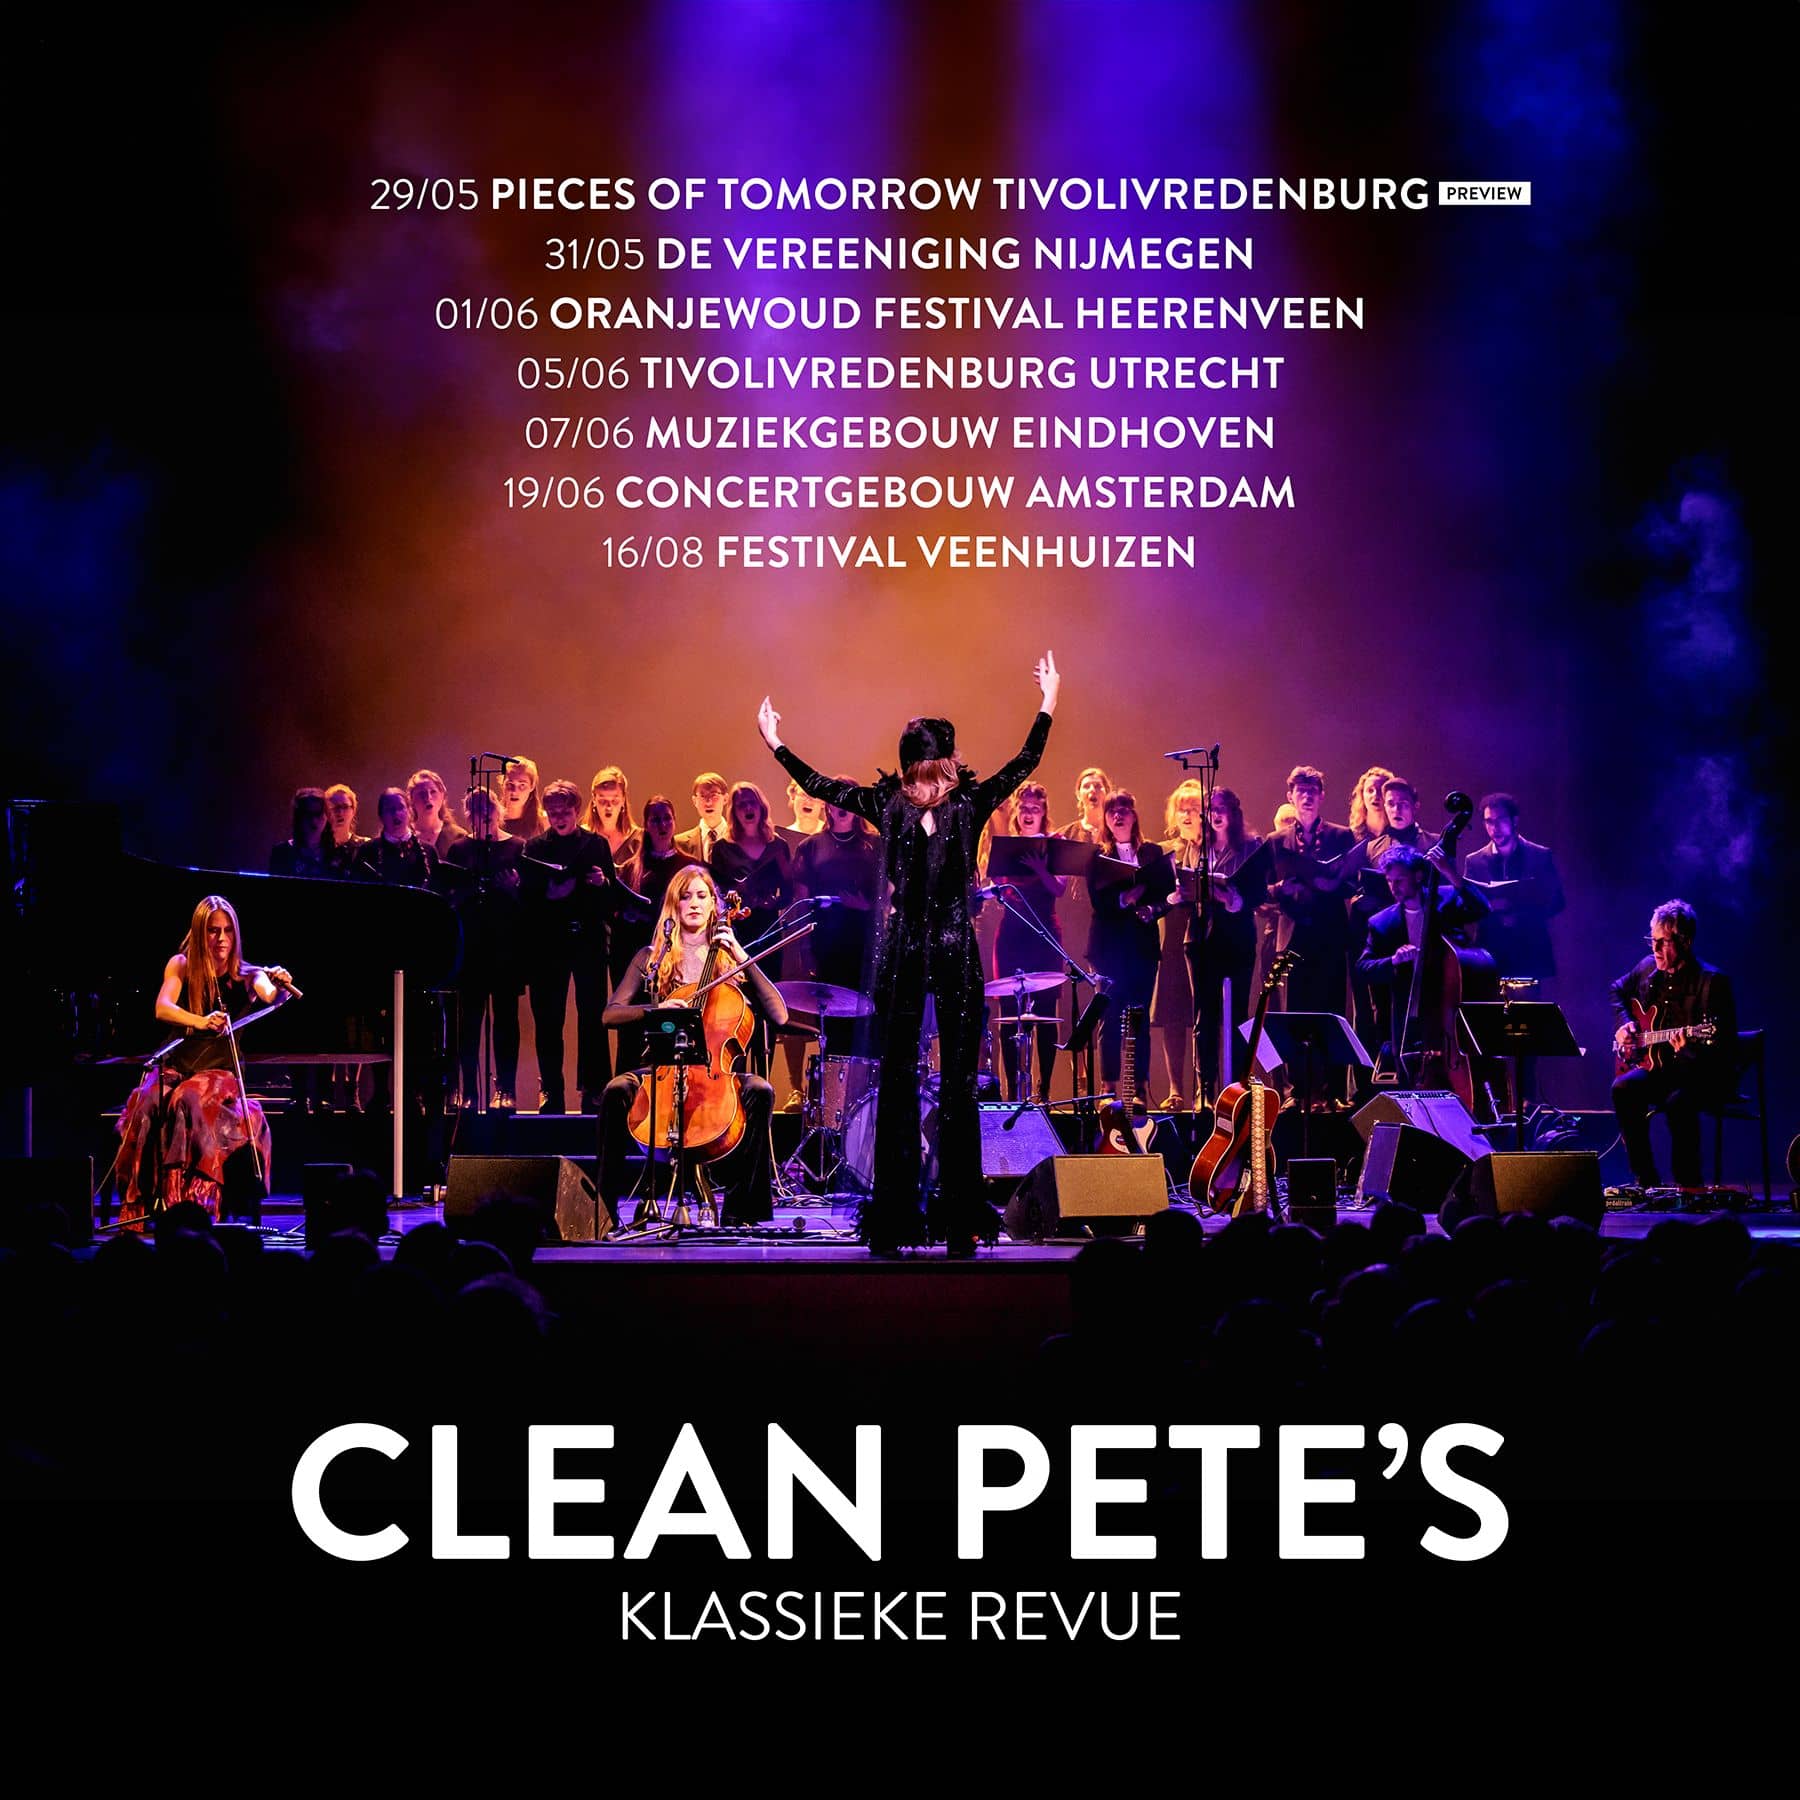 Clean Pete's Classical Revue